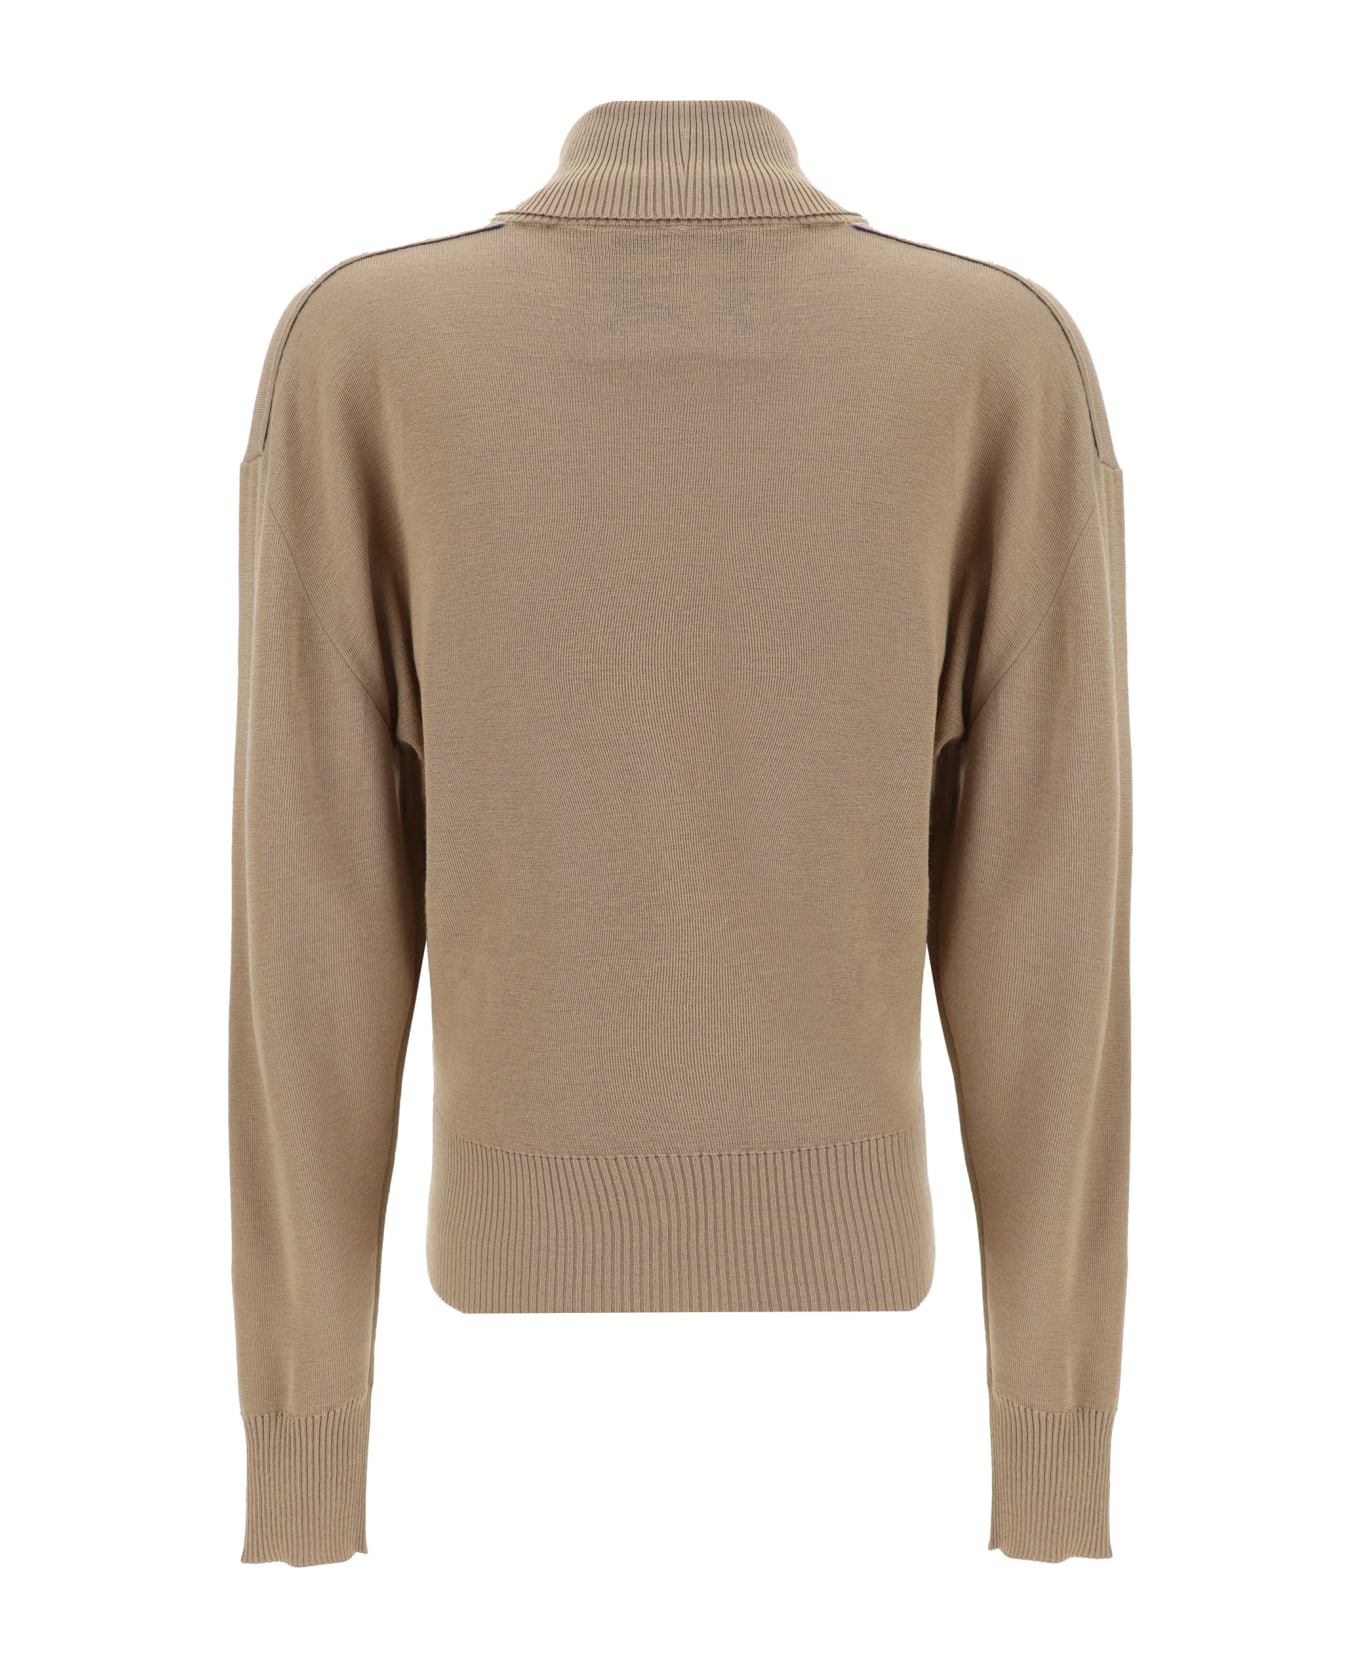 Burberry Turtleneck Sweater - Flax